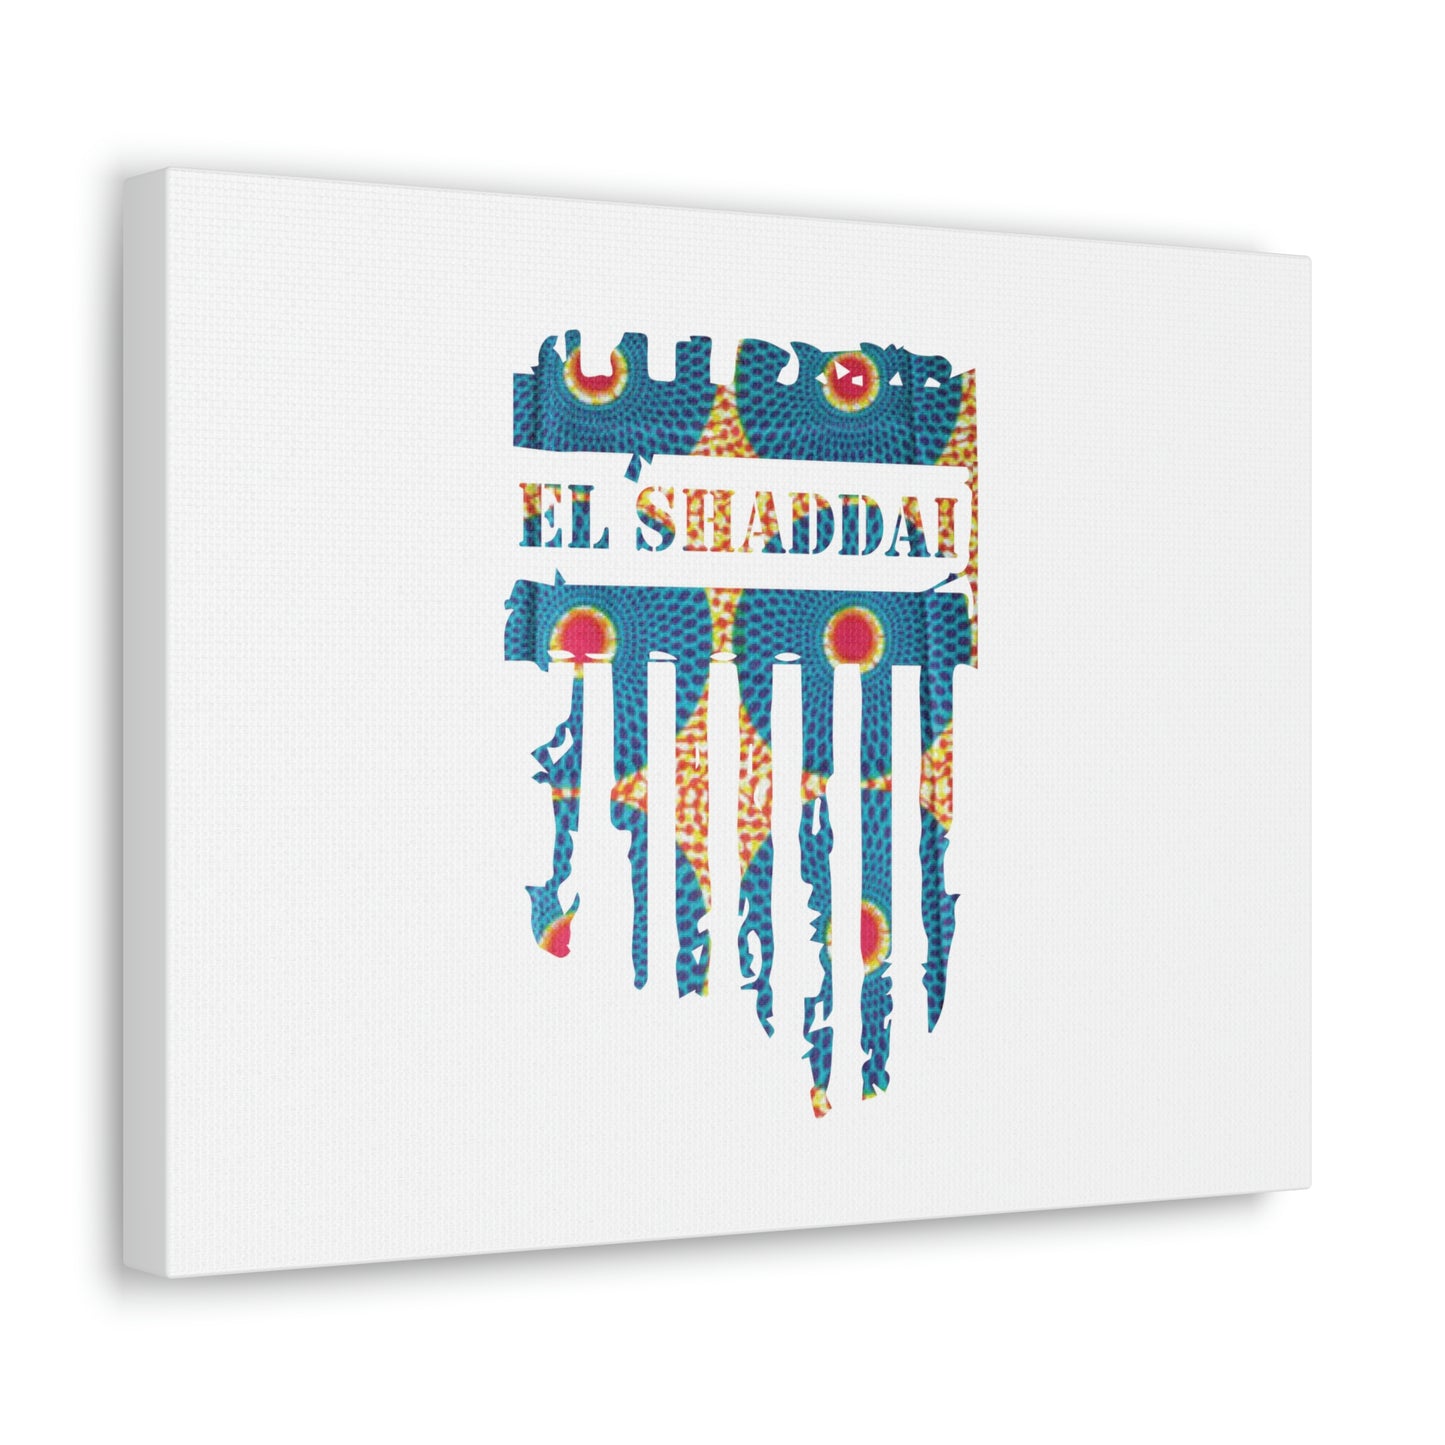 El ShaddaI